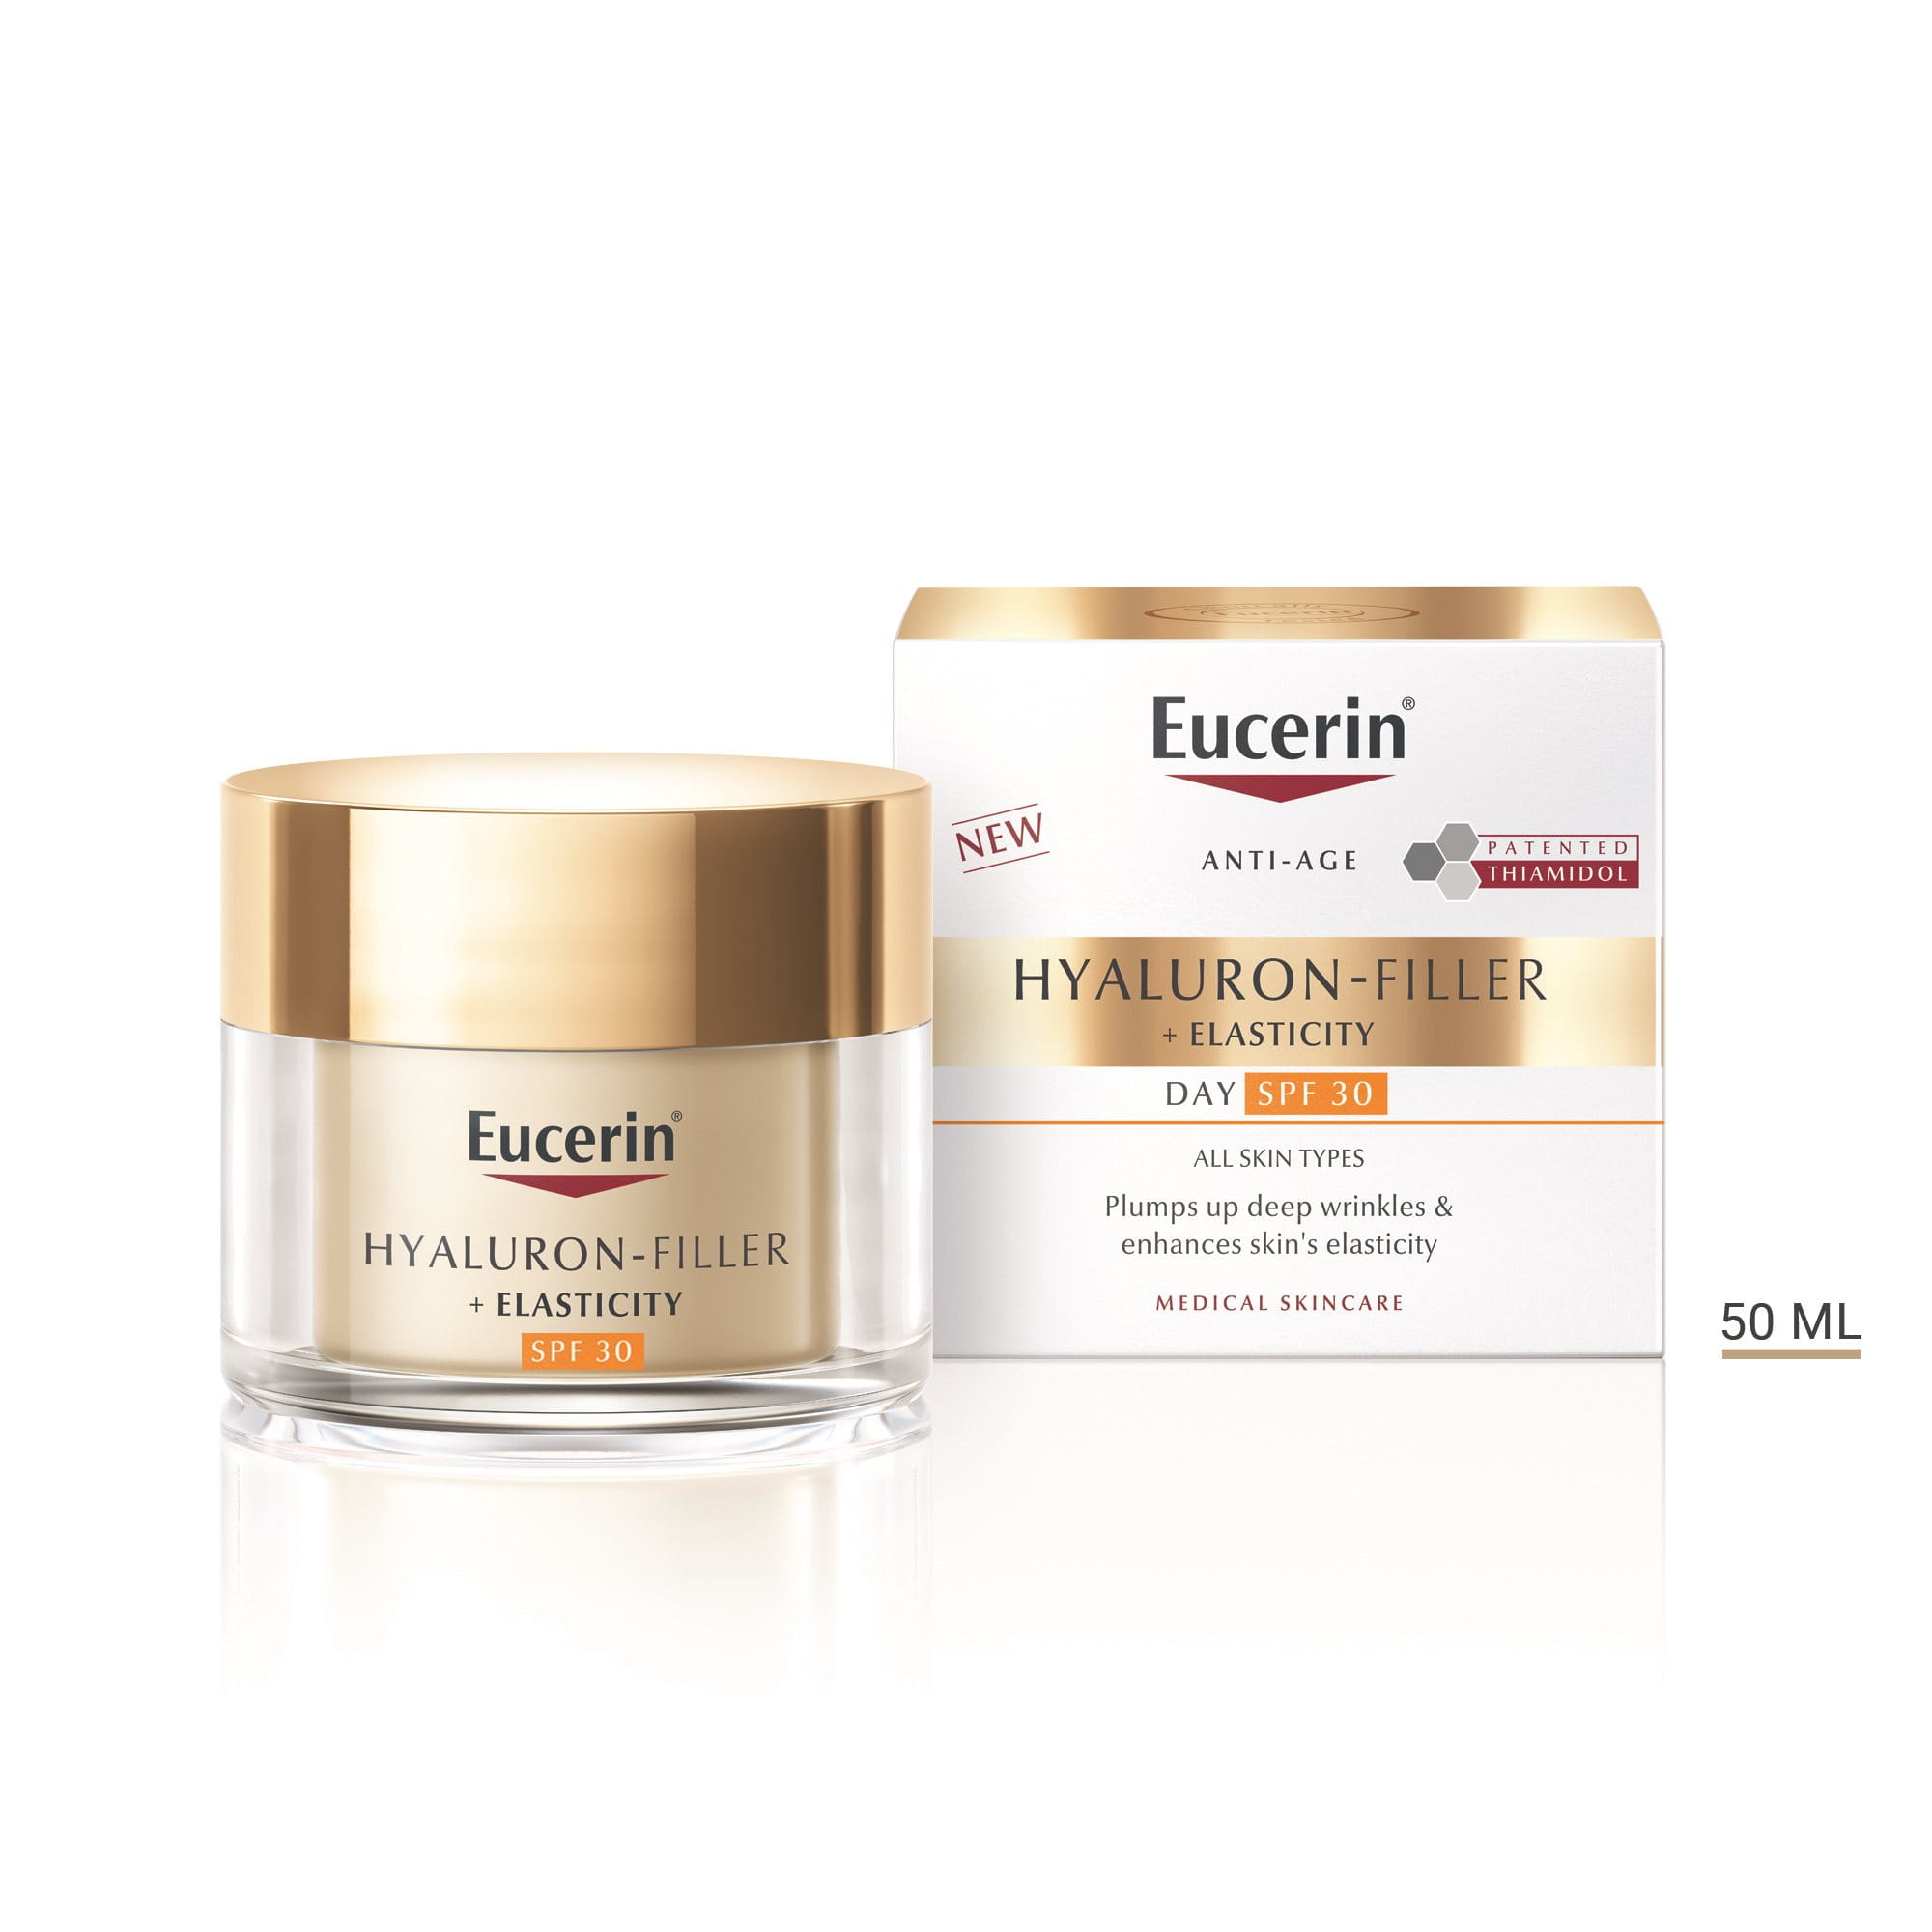 Deep wrinkle cream from Eucerin